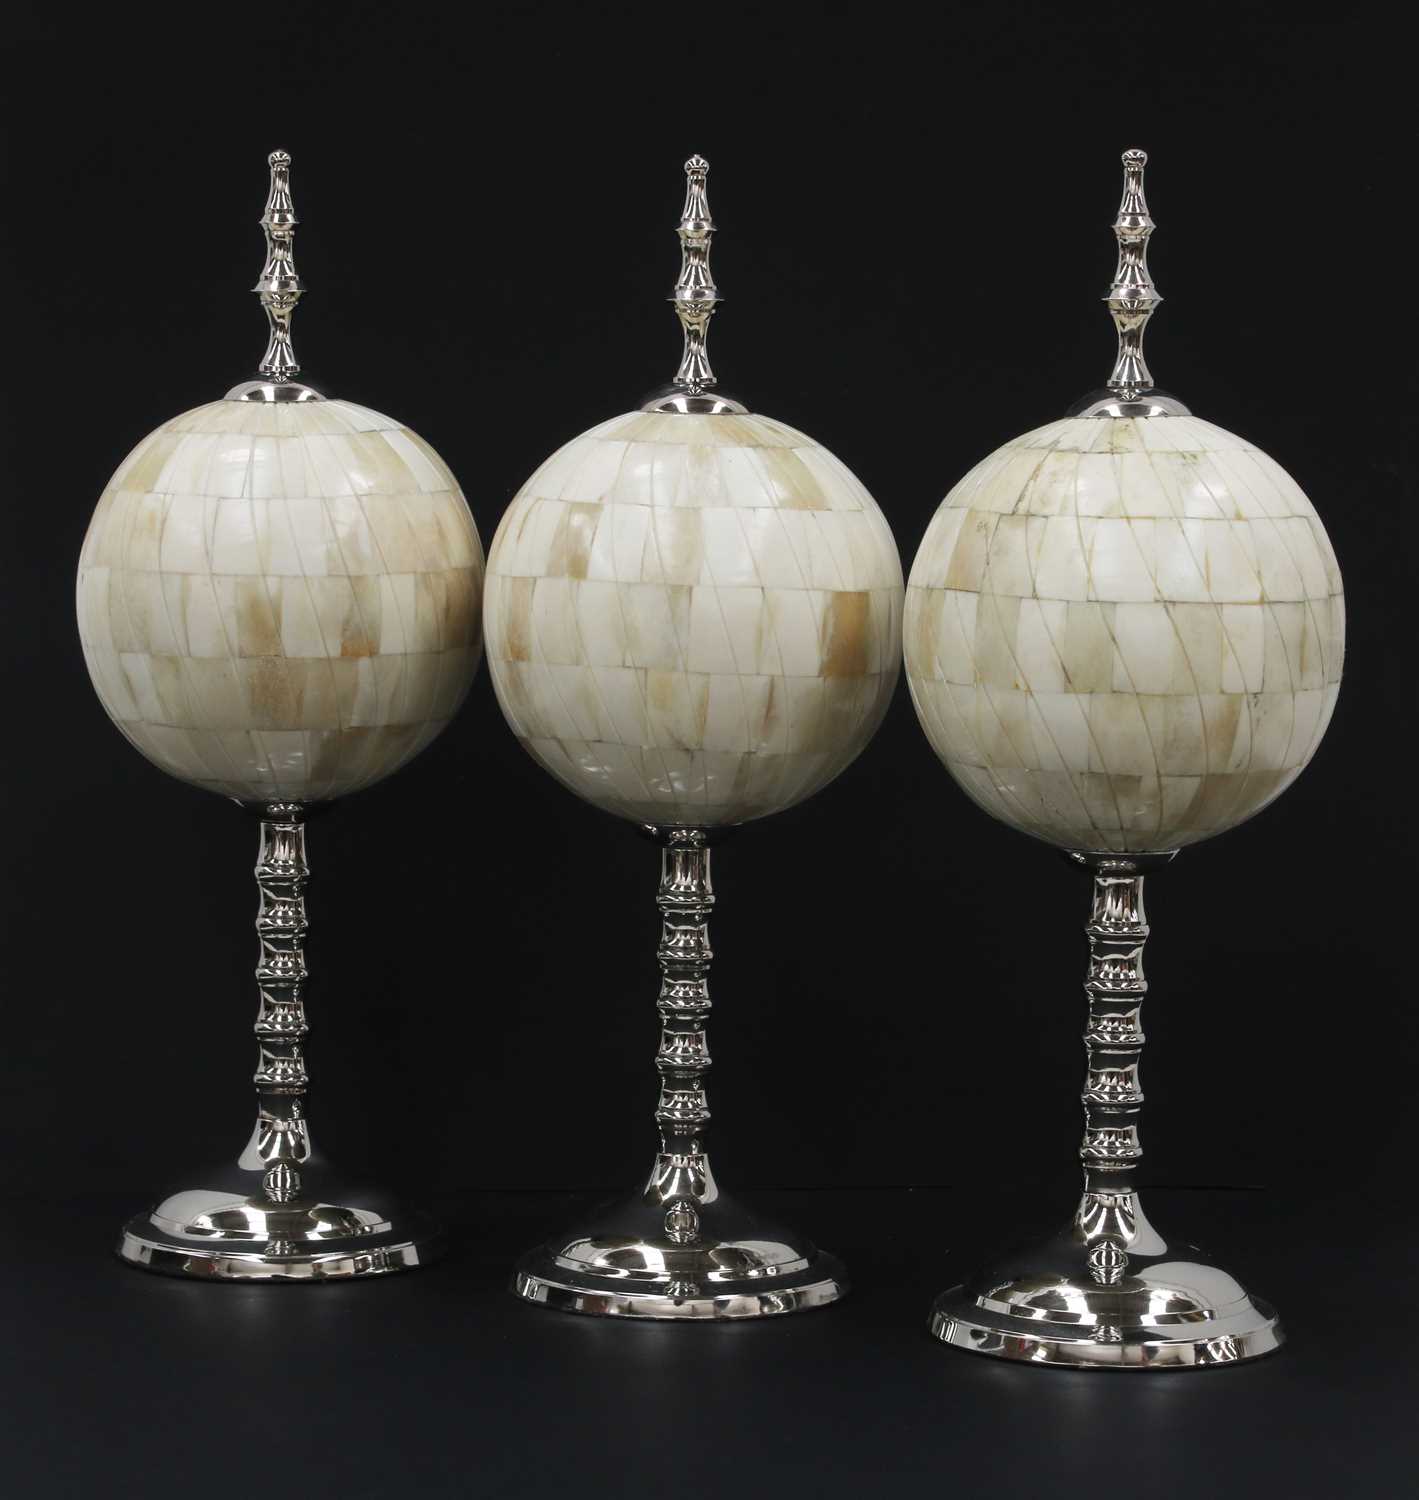 A box of globe ornaments